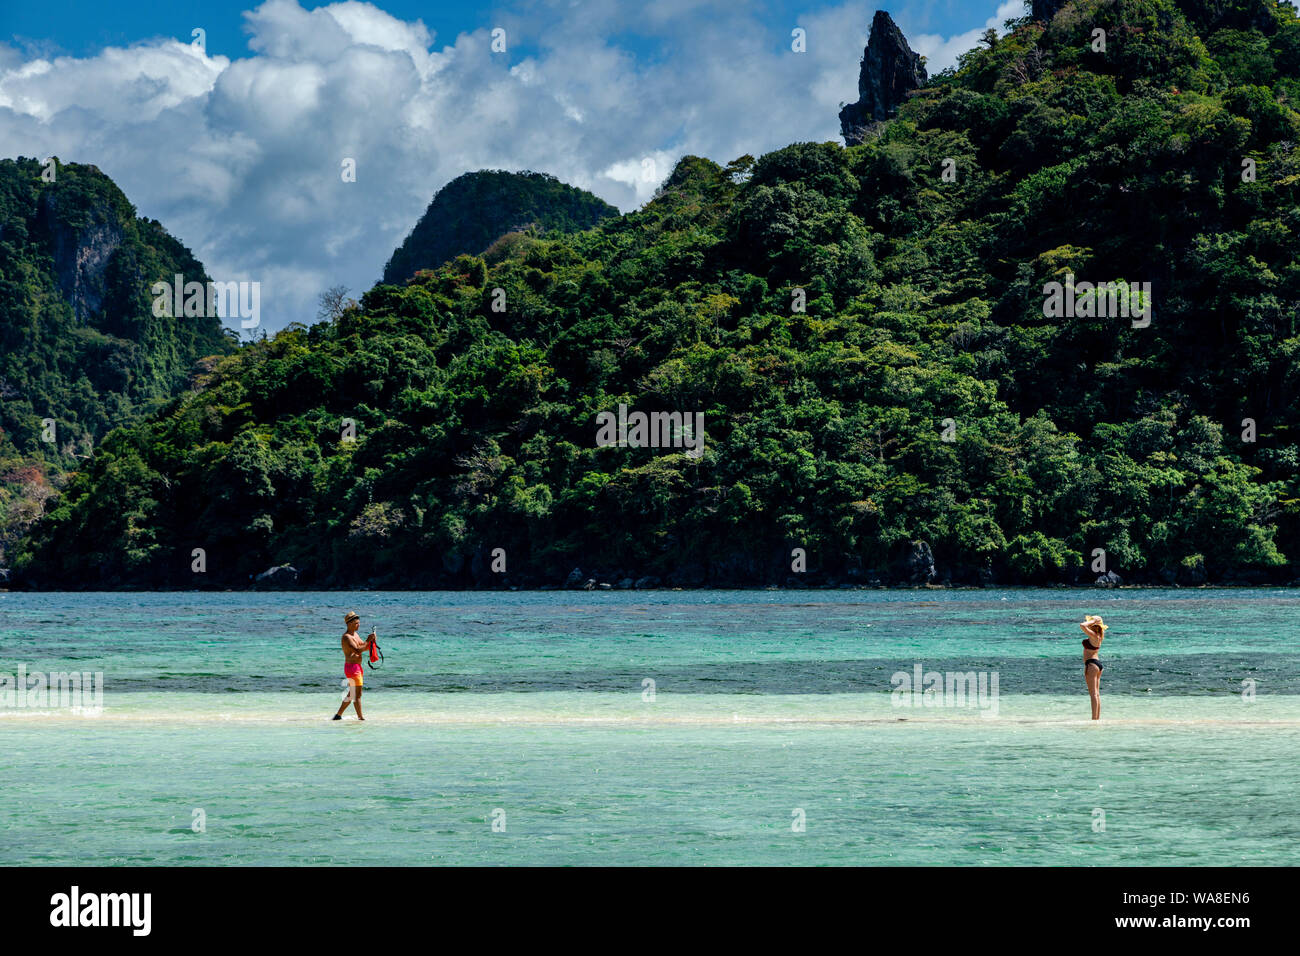 Tourists Walking On A Sandbar At Low Tide, Snake Island, El Nido, Palawan, The Philippines Stock Photo